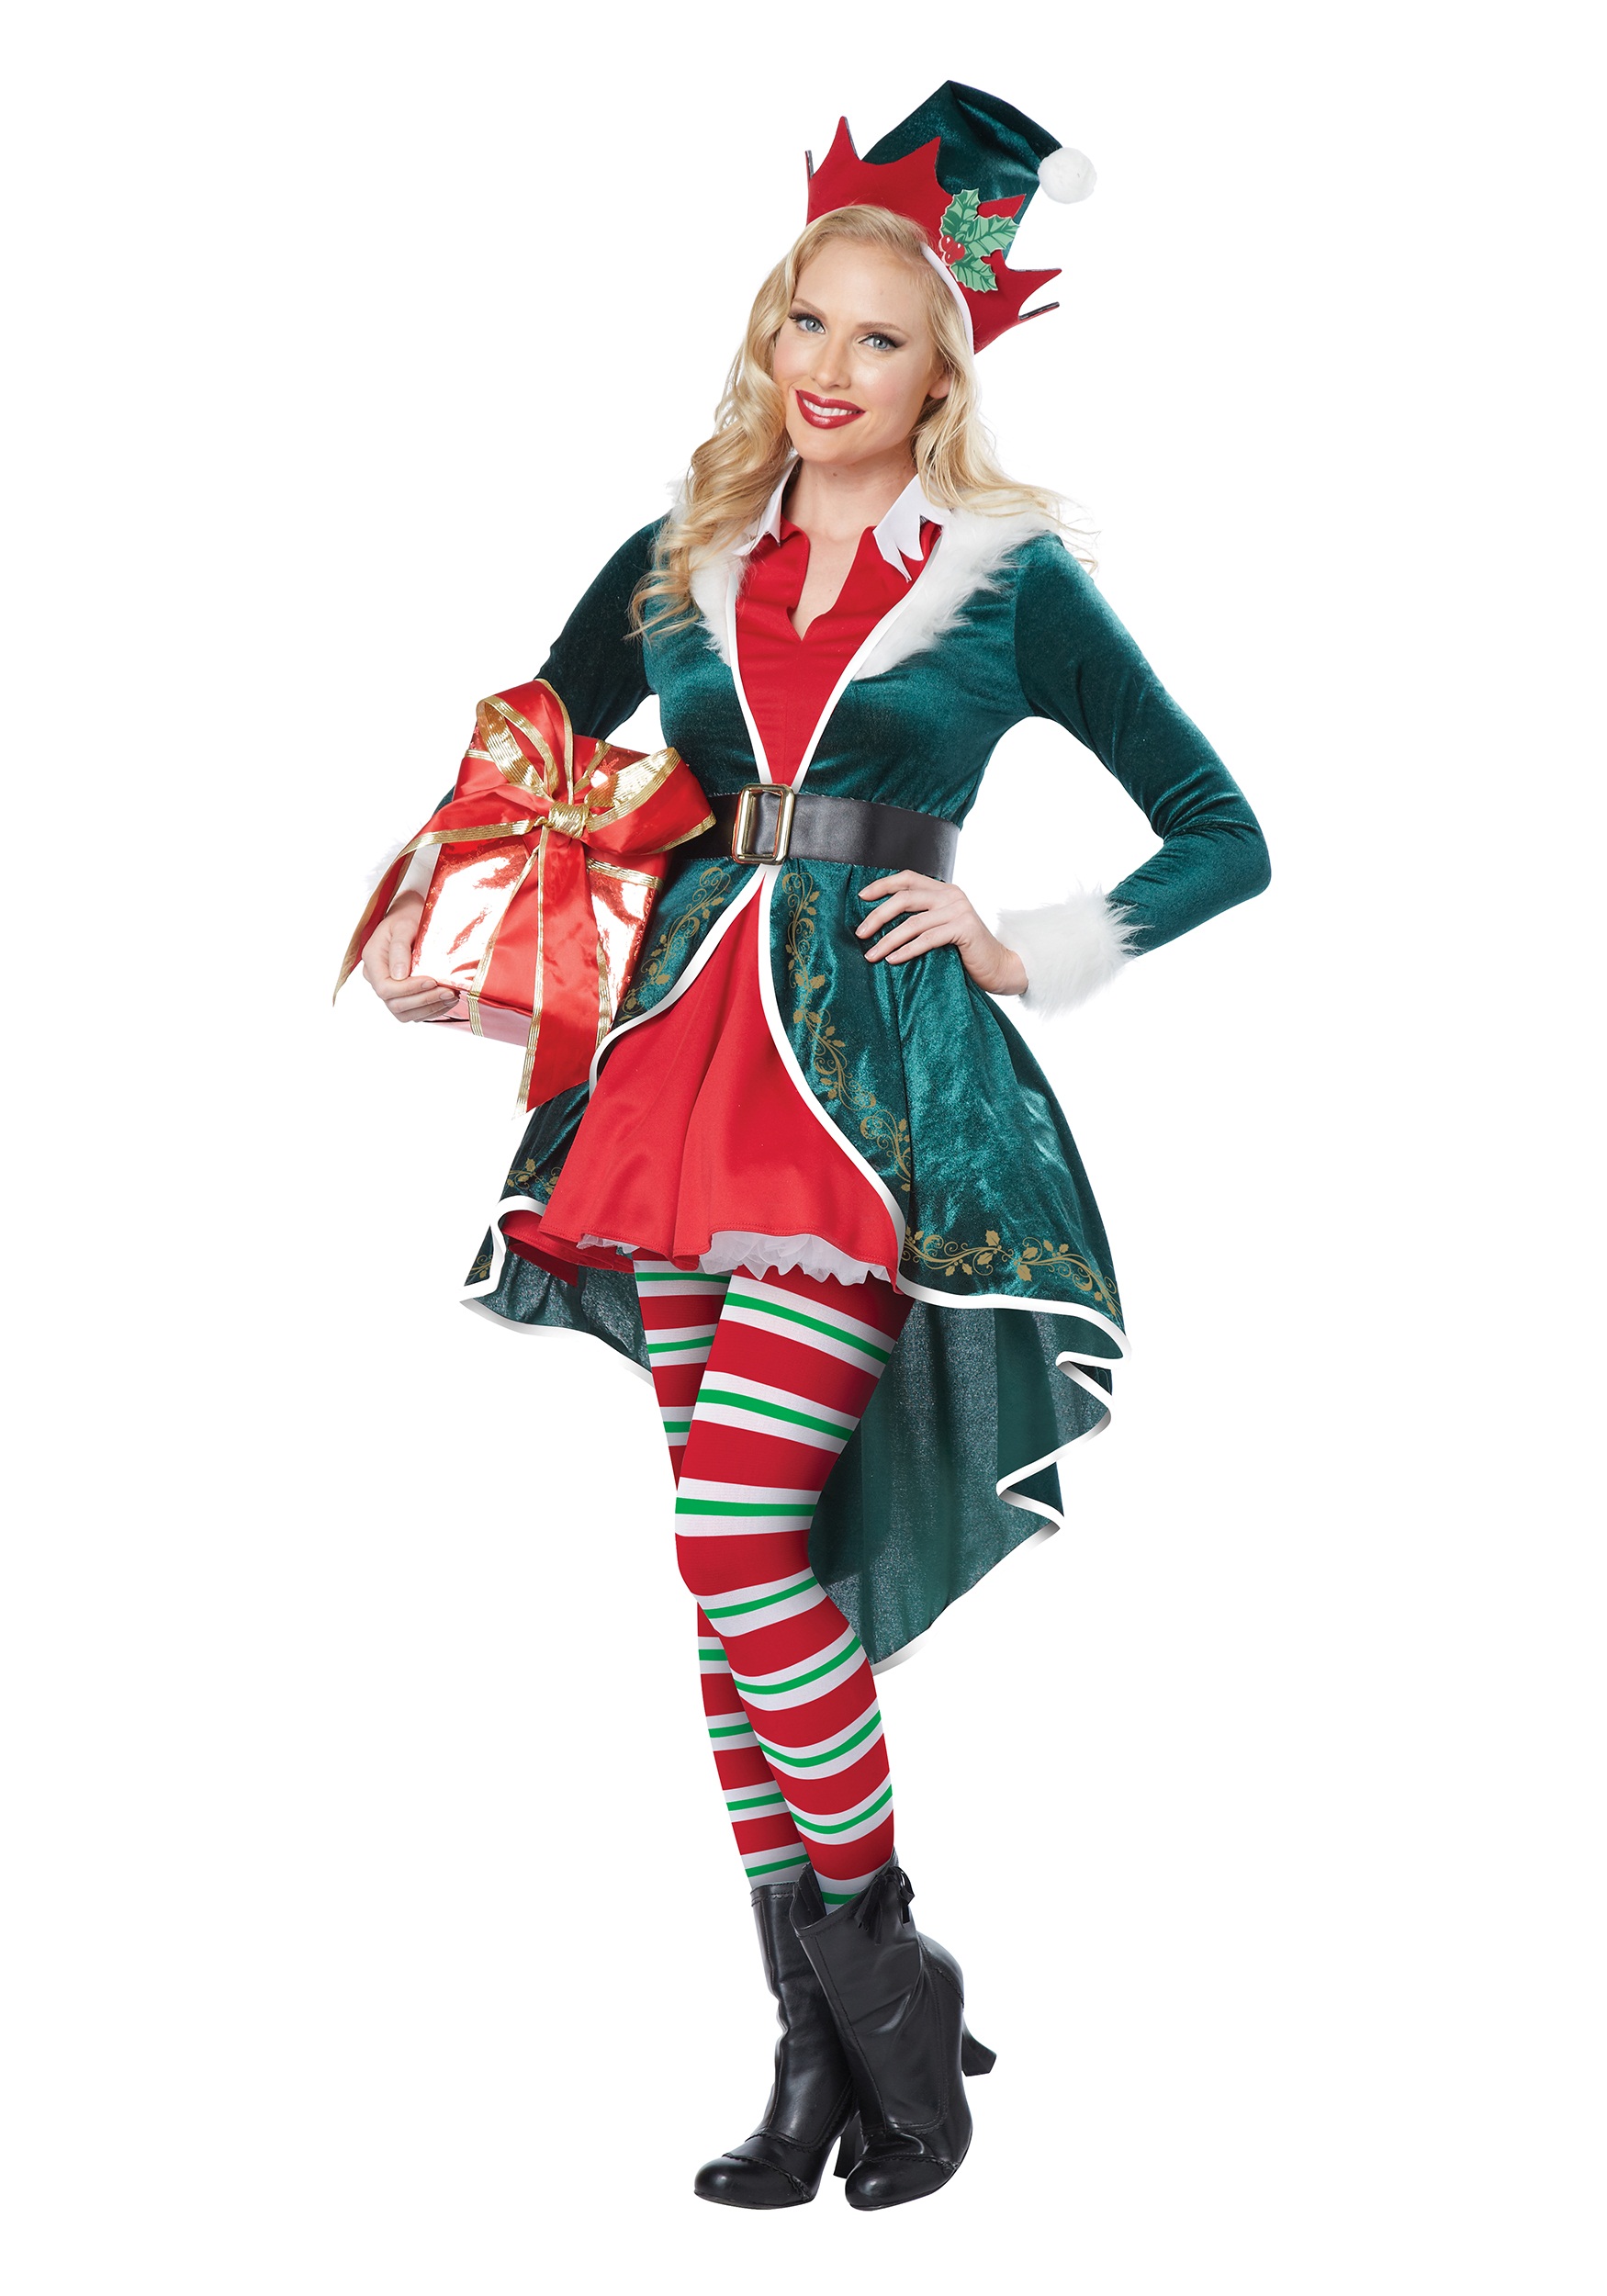  /><br/><p>Elf Girl Costume</p></center></div>
<script type='text/javascript'>
var obj0=document.getElementById(